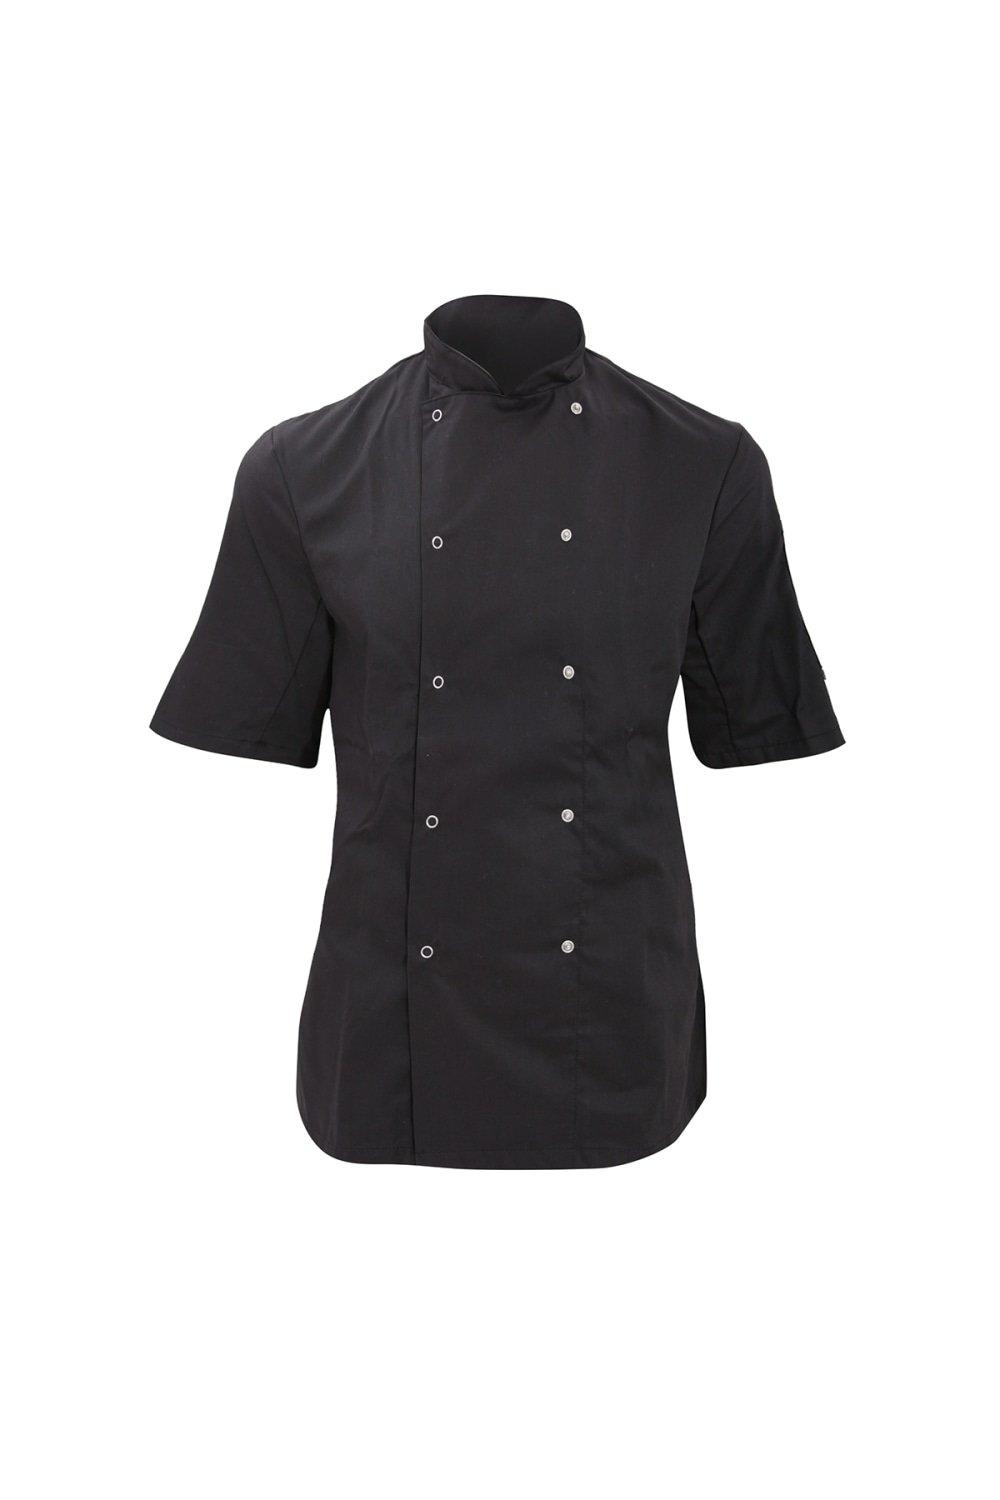 Economy Short Sleeve Chefs Jacket Chefswear Pack of 2